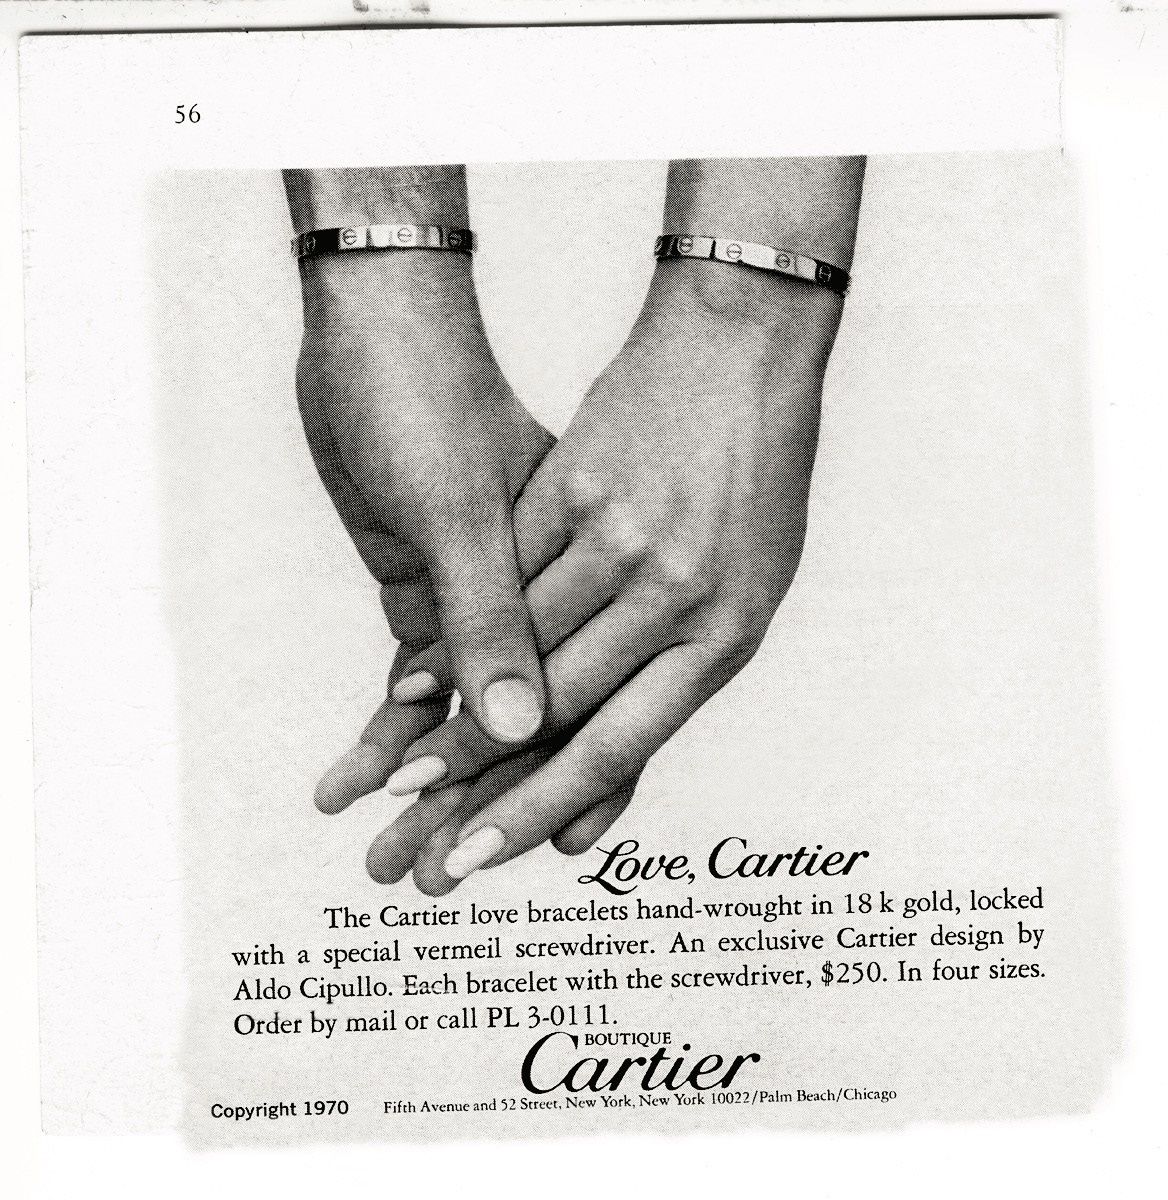 cartier love bracelet price history